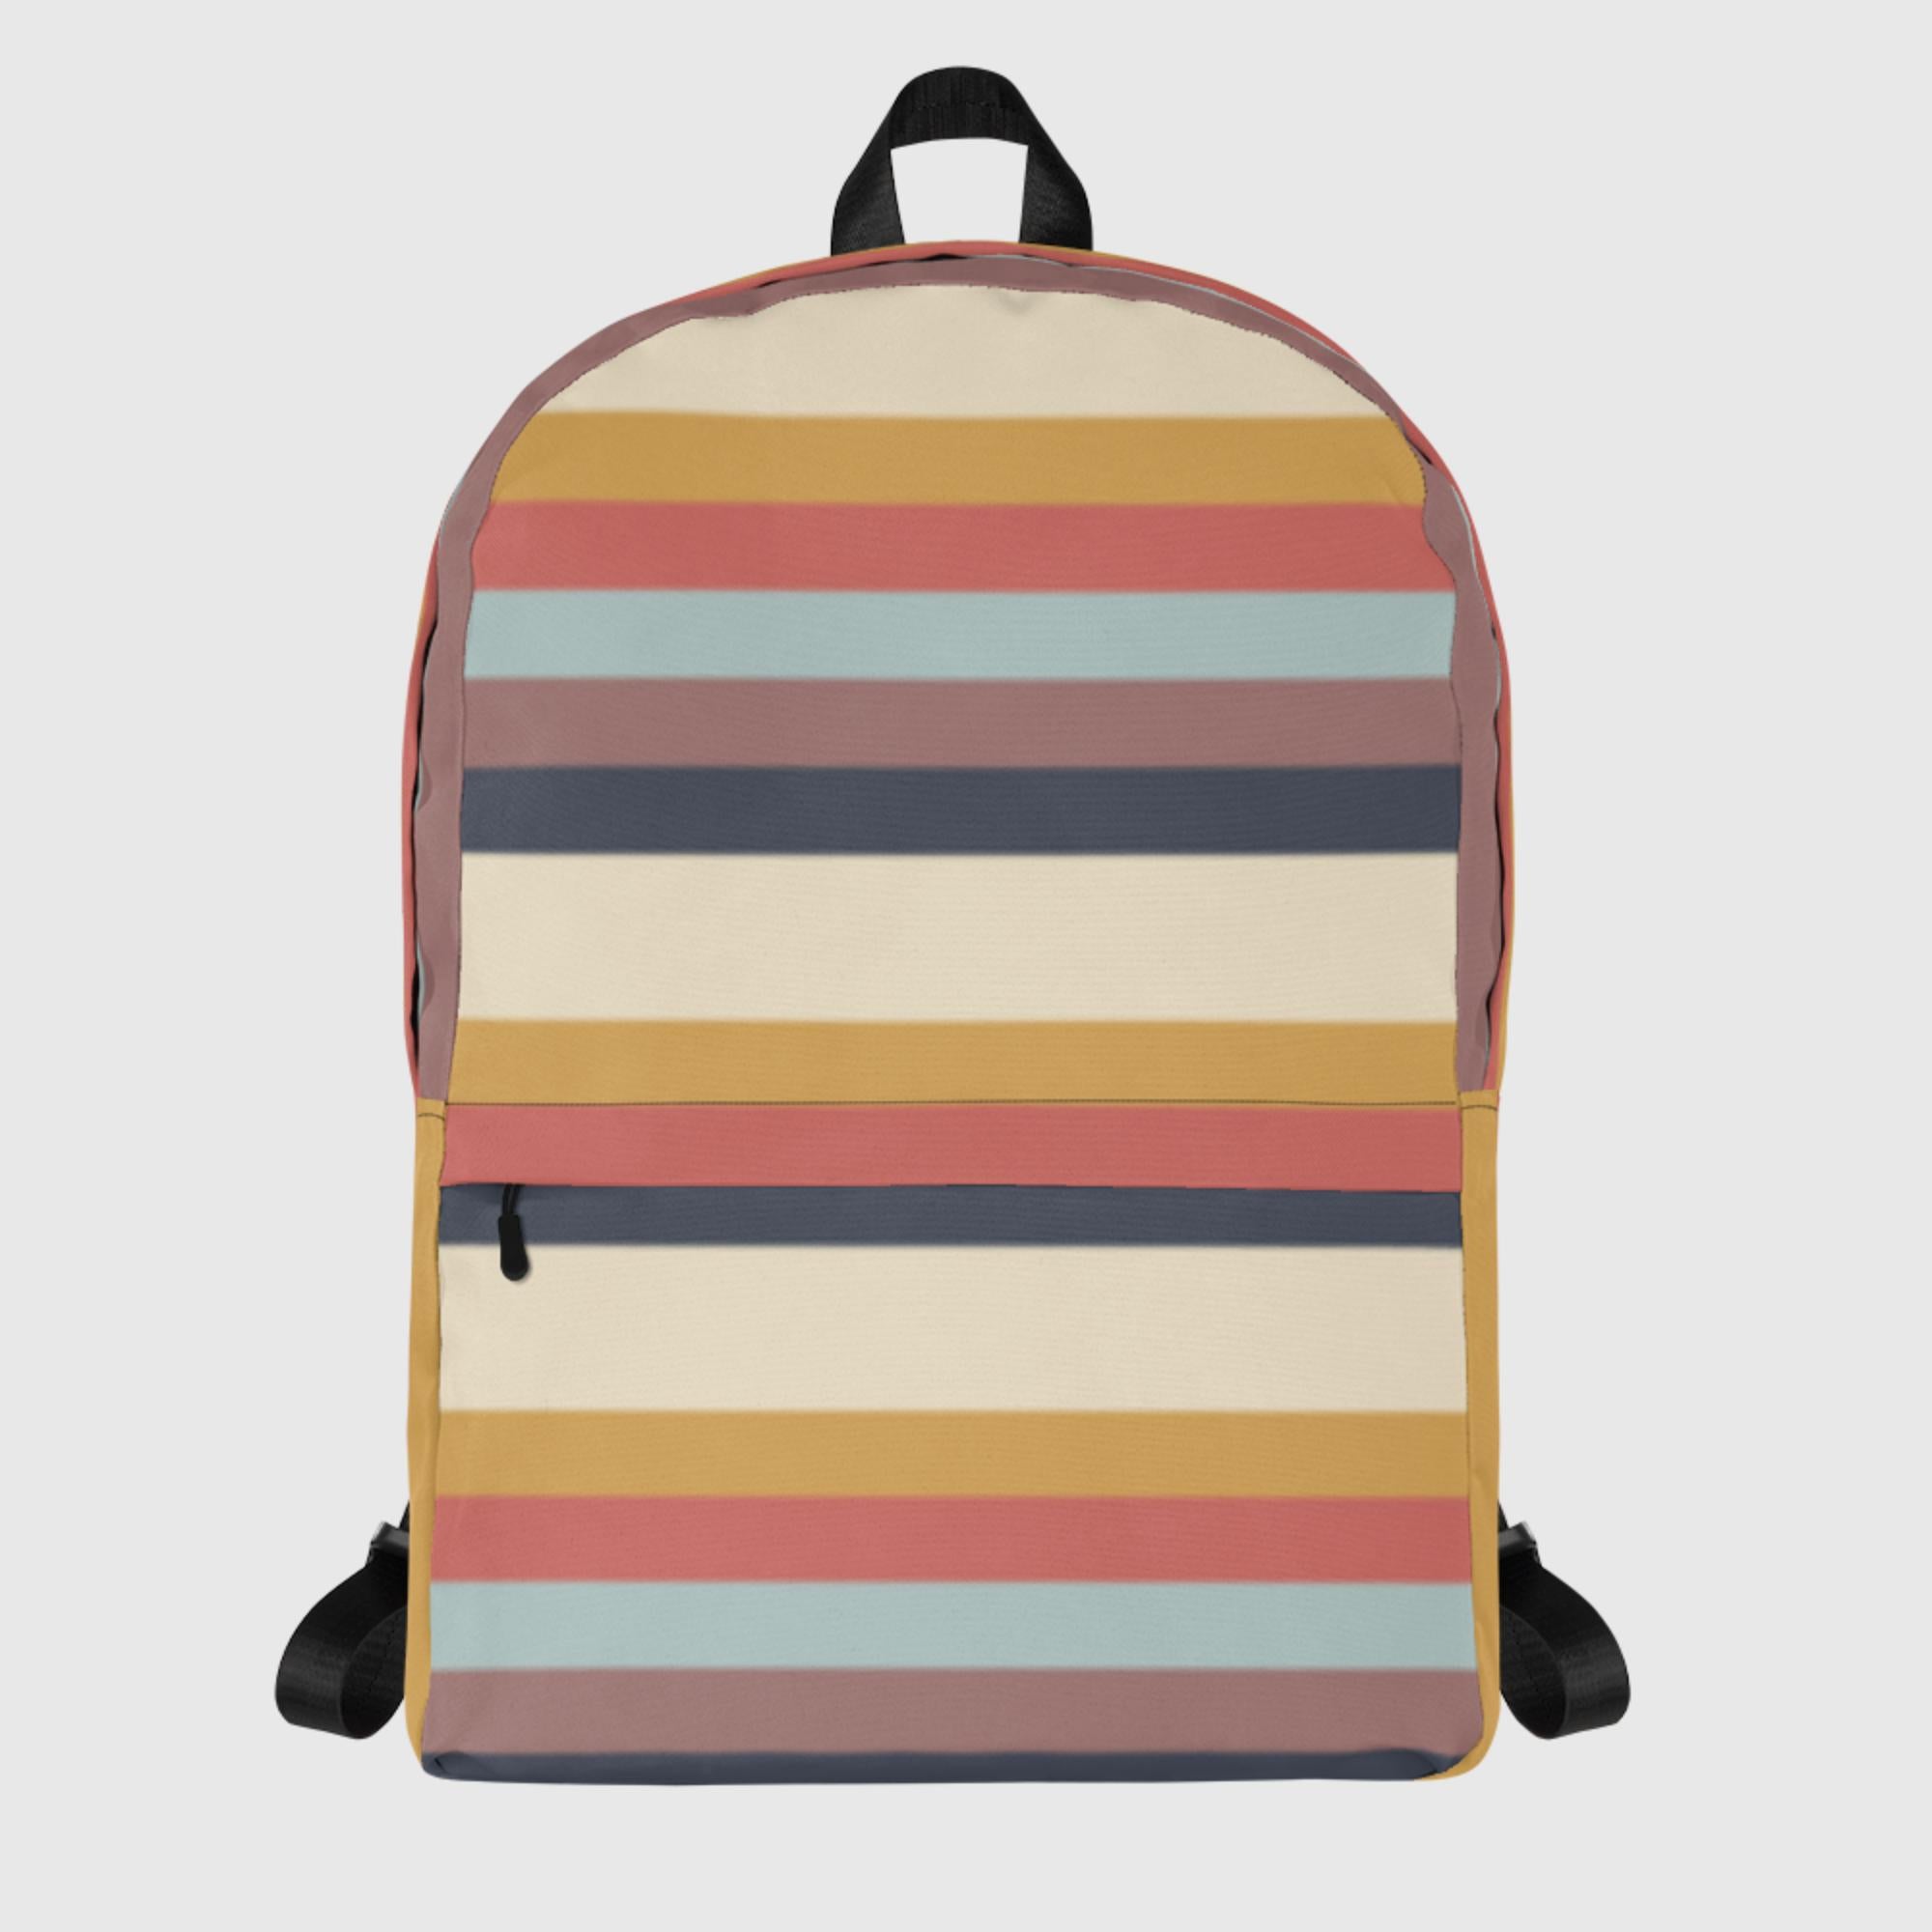 Backpack - Stripes - Sunset Harbor Clothing